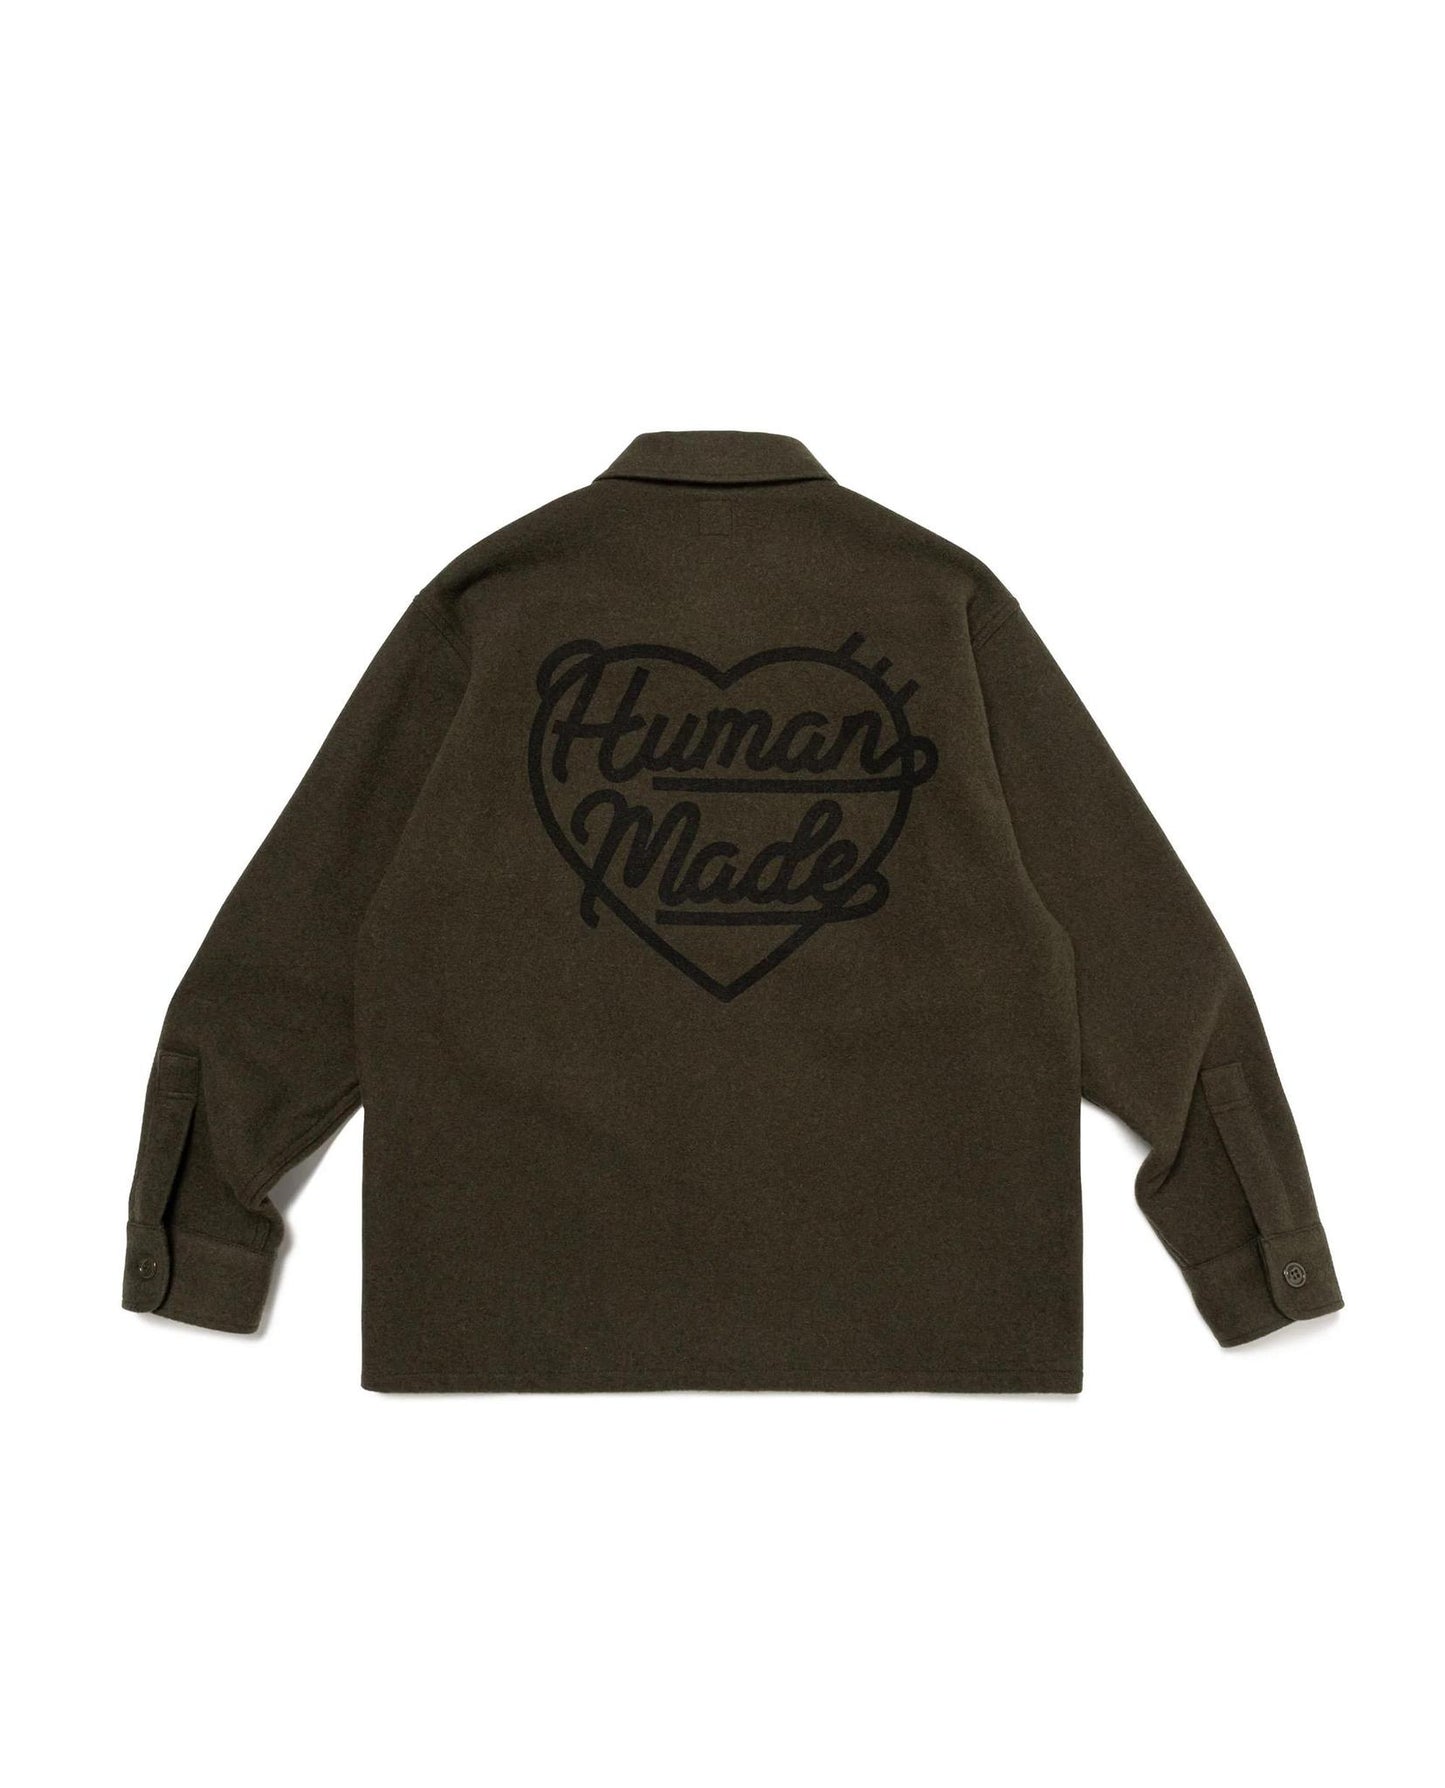 Human Made Wool CPO Shirts | STASHED